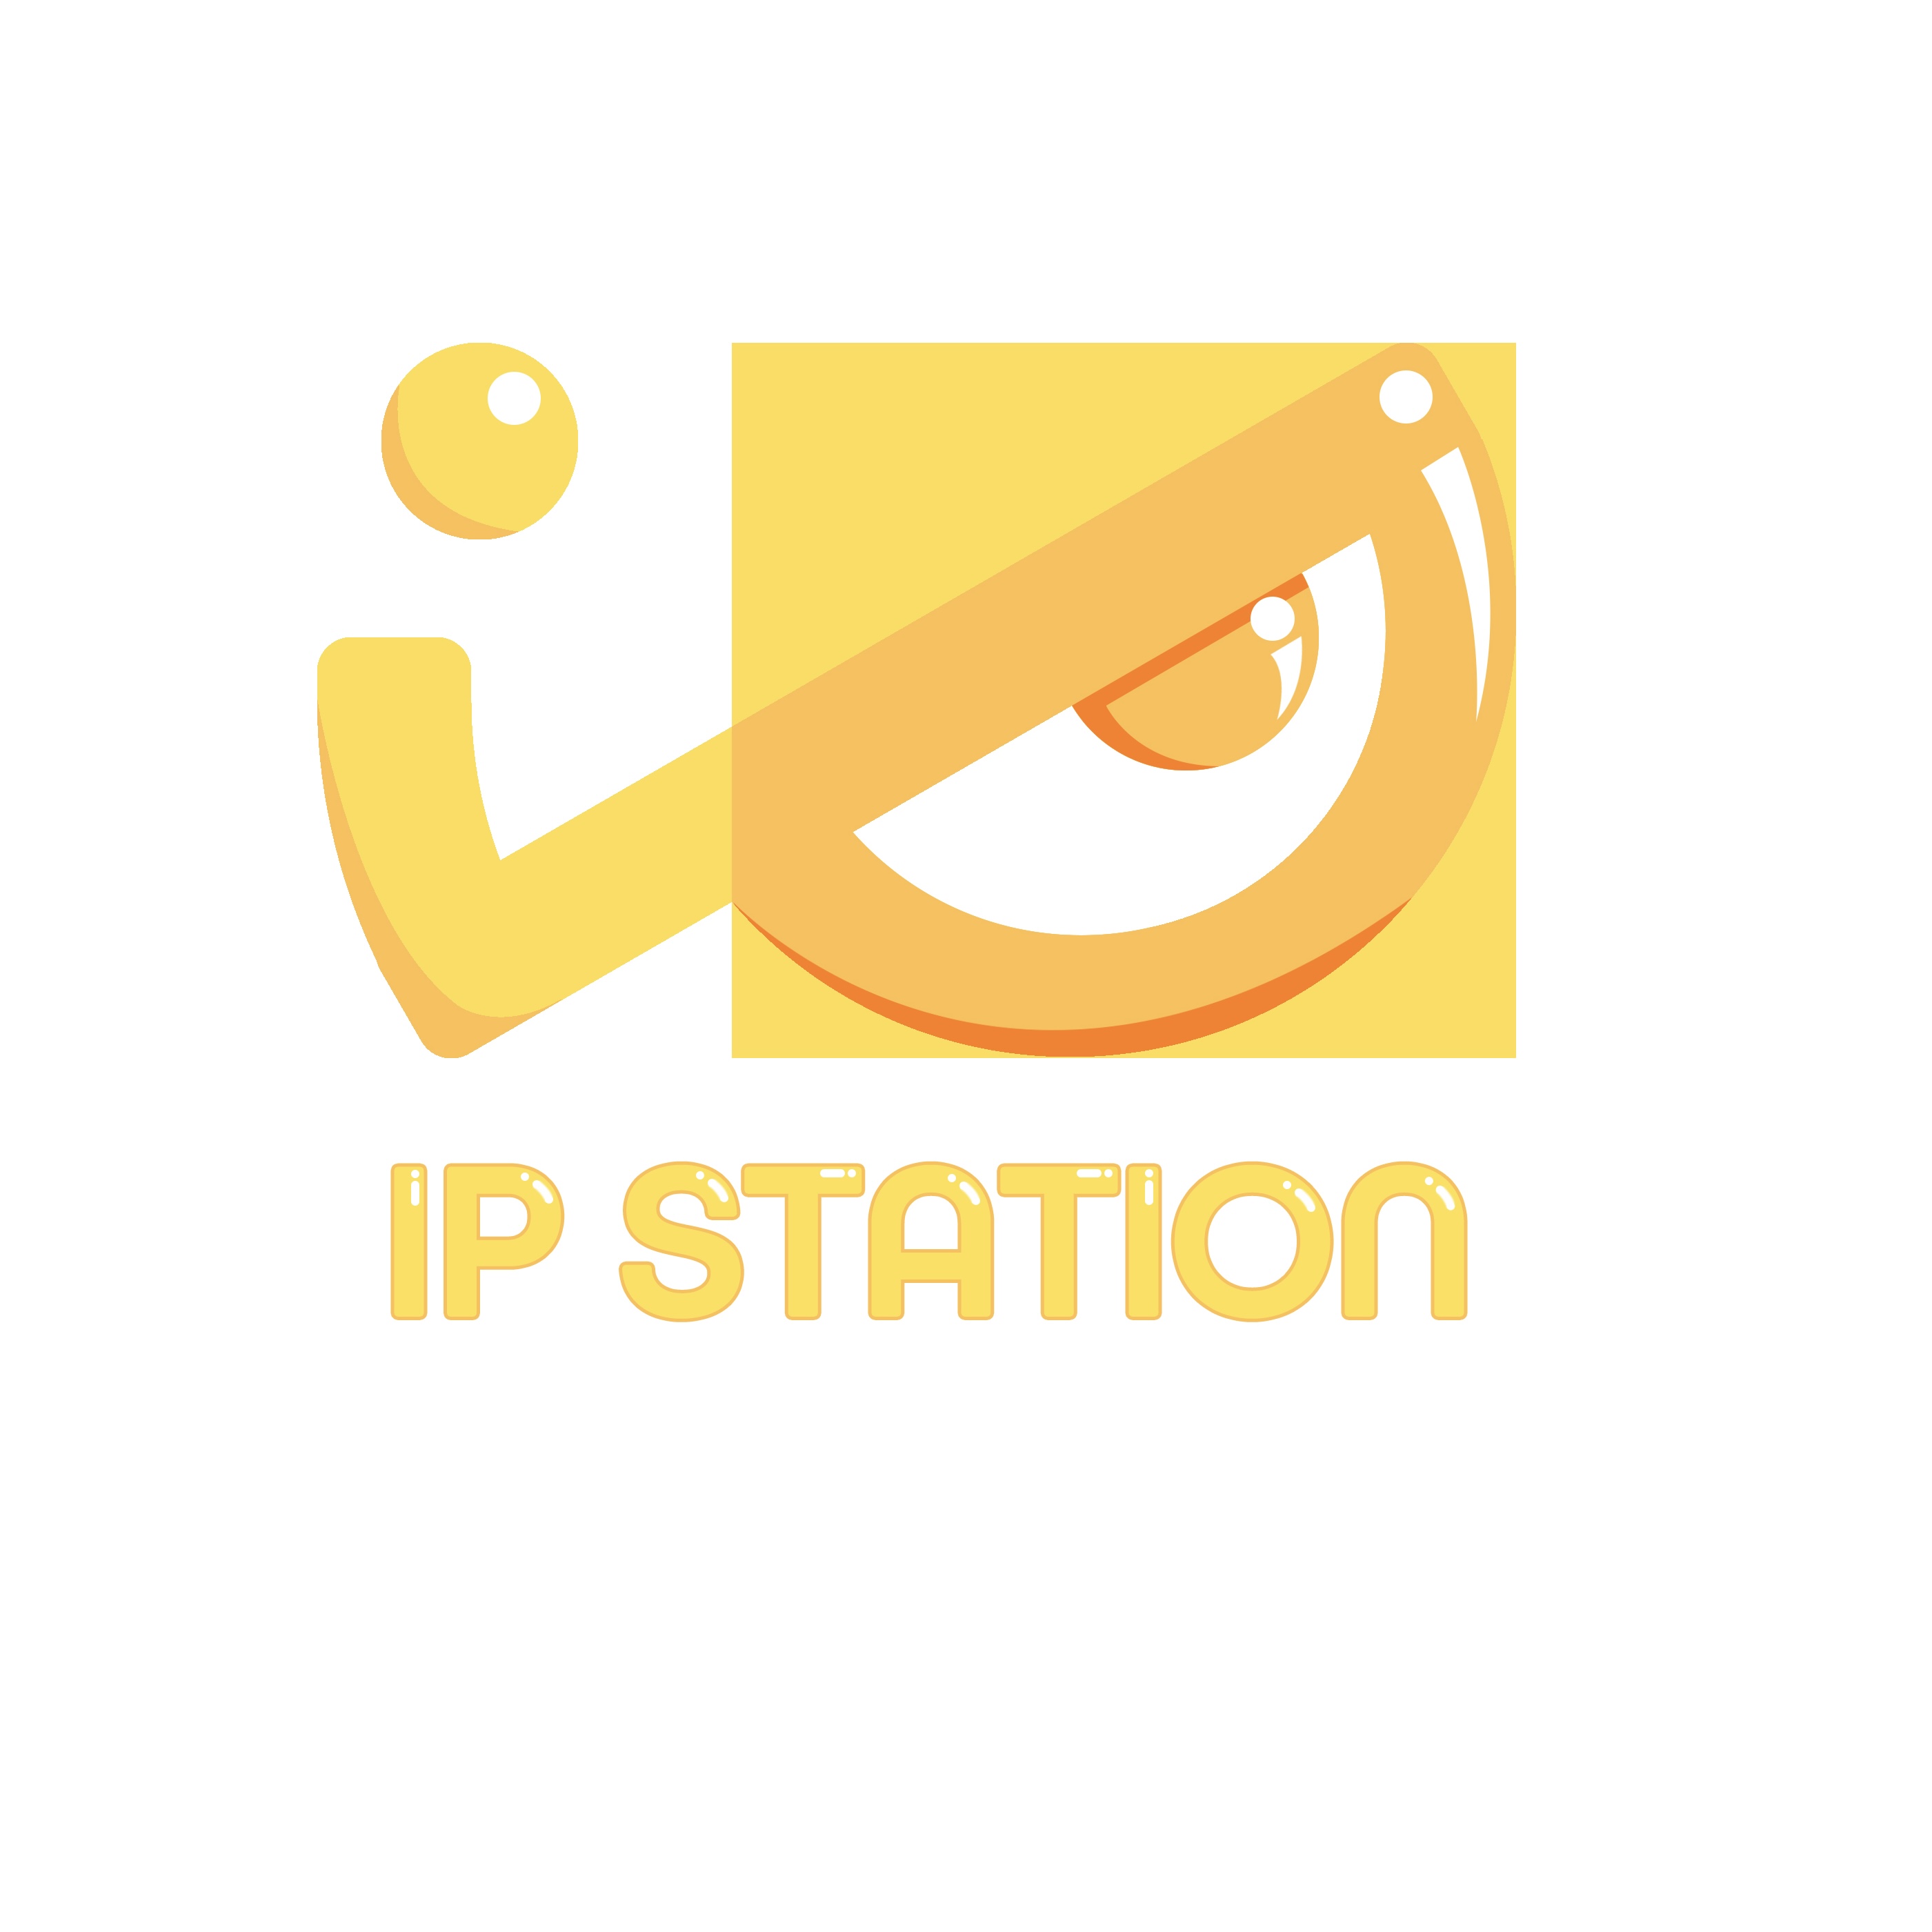 IP Station